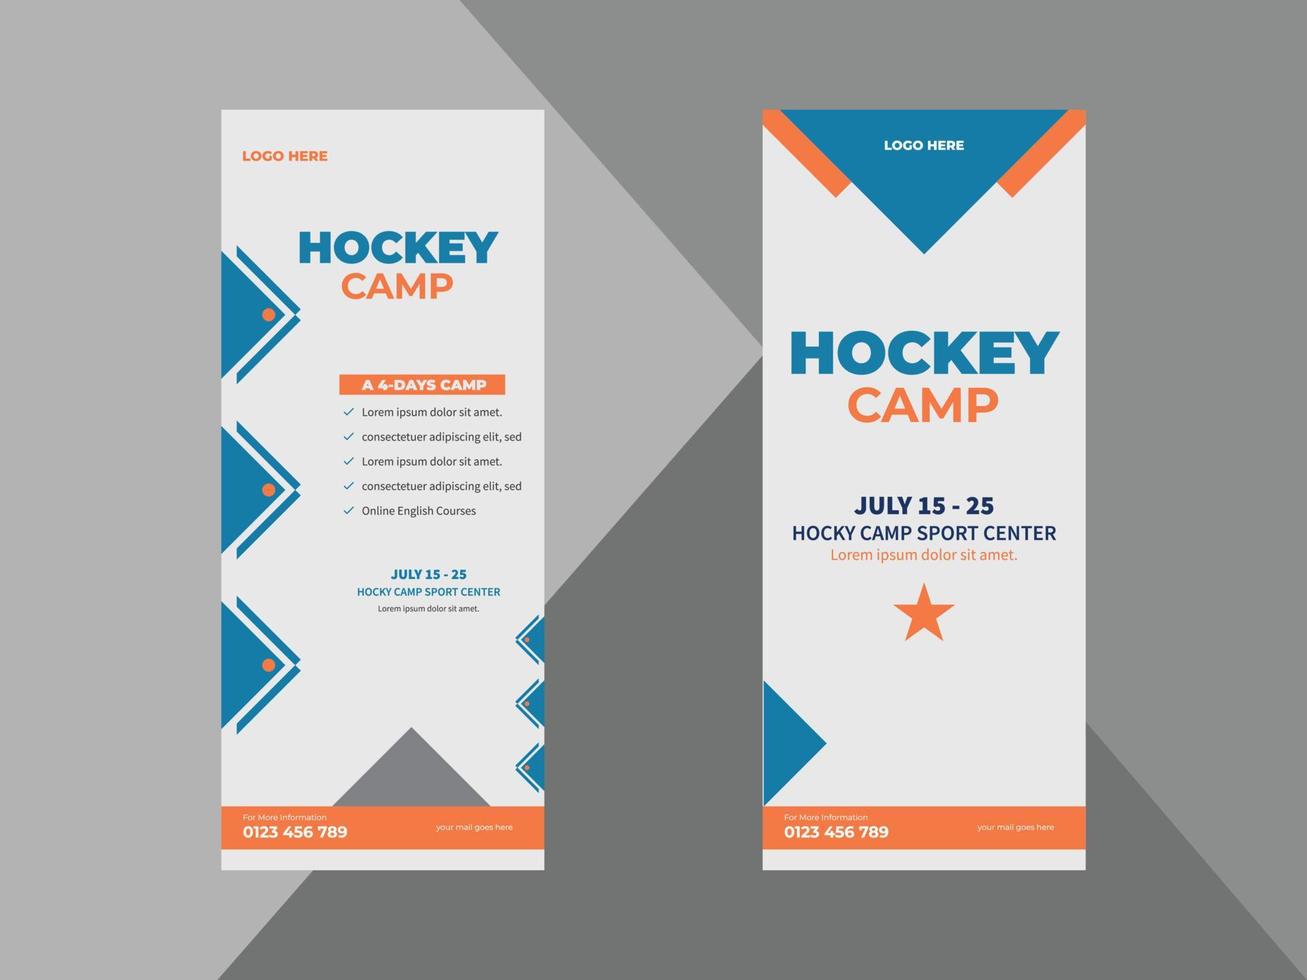 plantilla de diseño de banner enrollable del campamento de hockey. diseño de folletos de carteles de eventos deportivos. folleto de deportes de hockey. cubierta, pancarta enrollable, póster, listo para imprimir vector